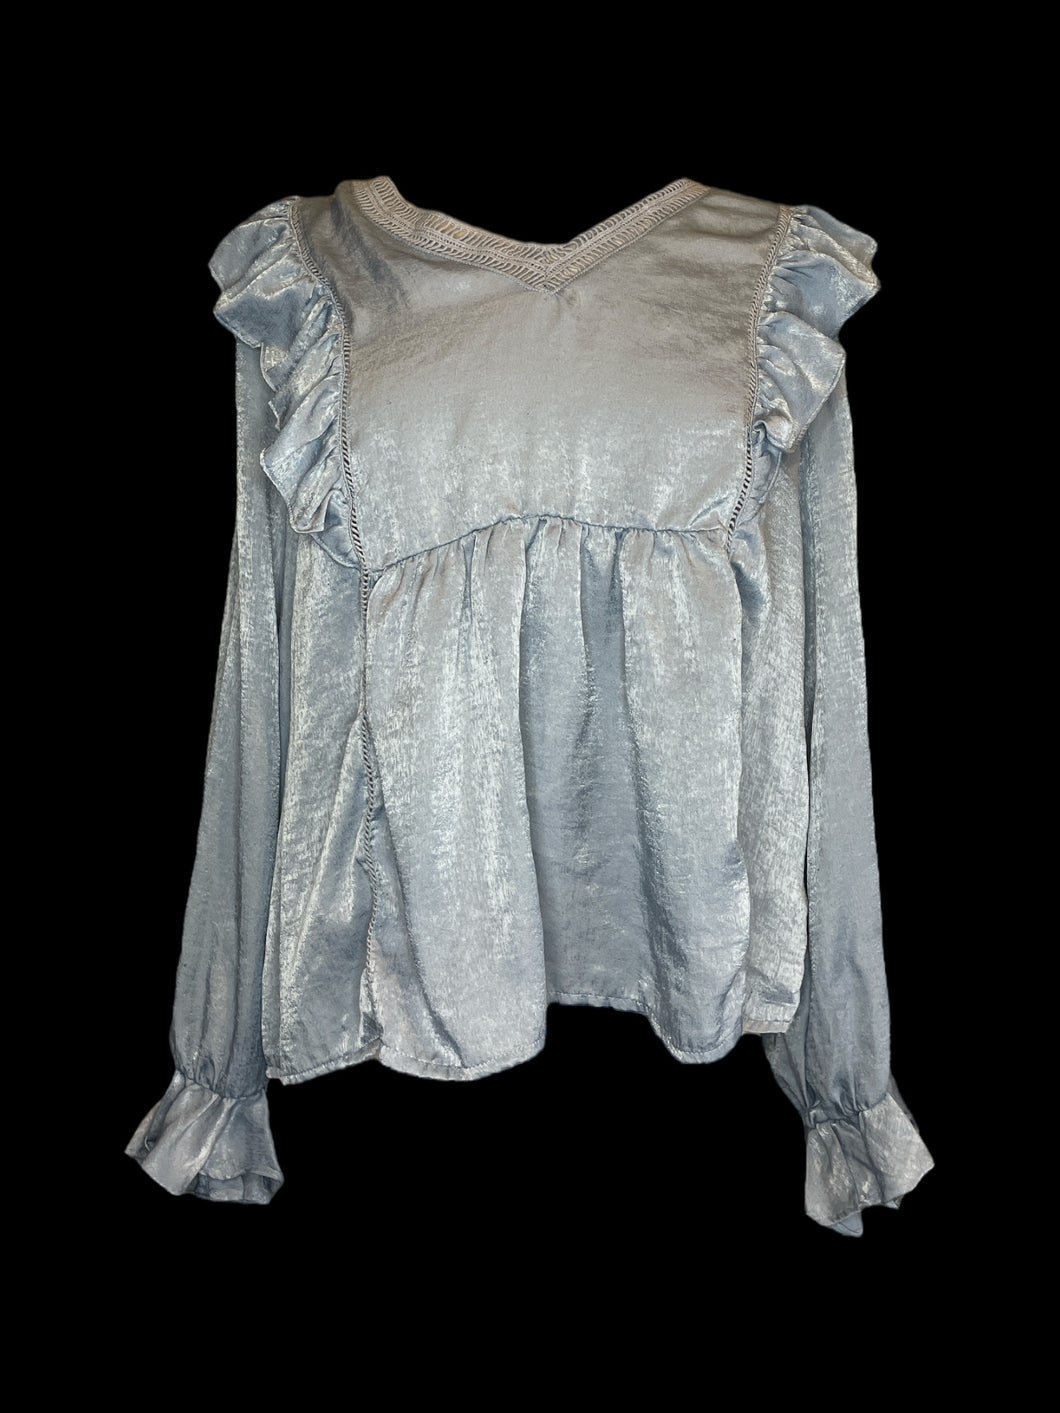 0X Dusty blue satin-like balloon sleeve top w/ paneling, ruffle detail, & mesh collar